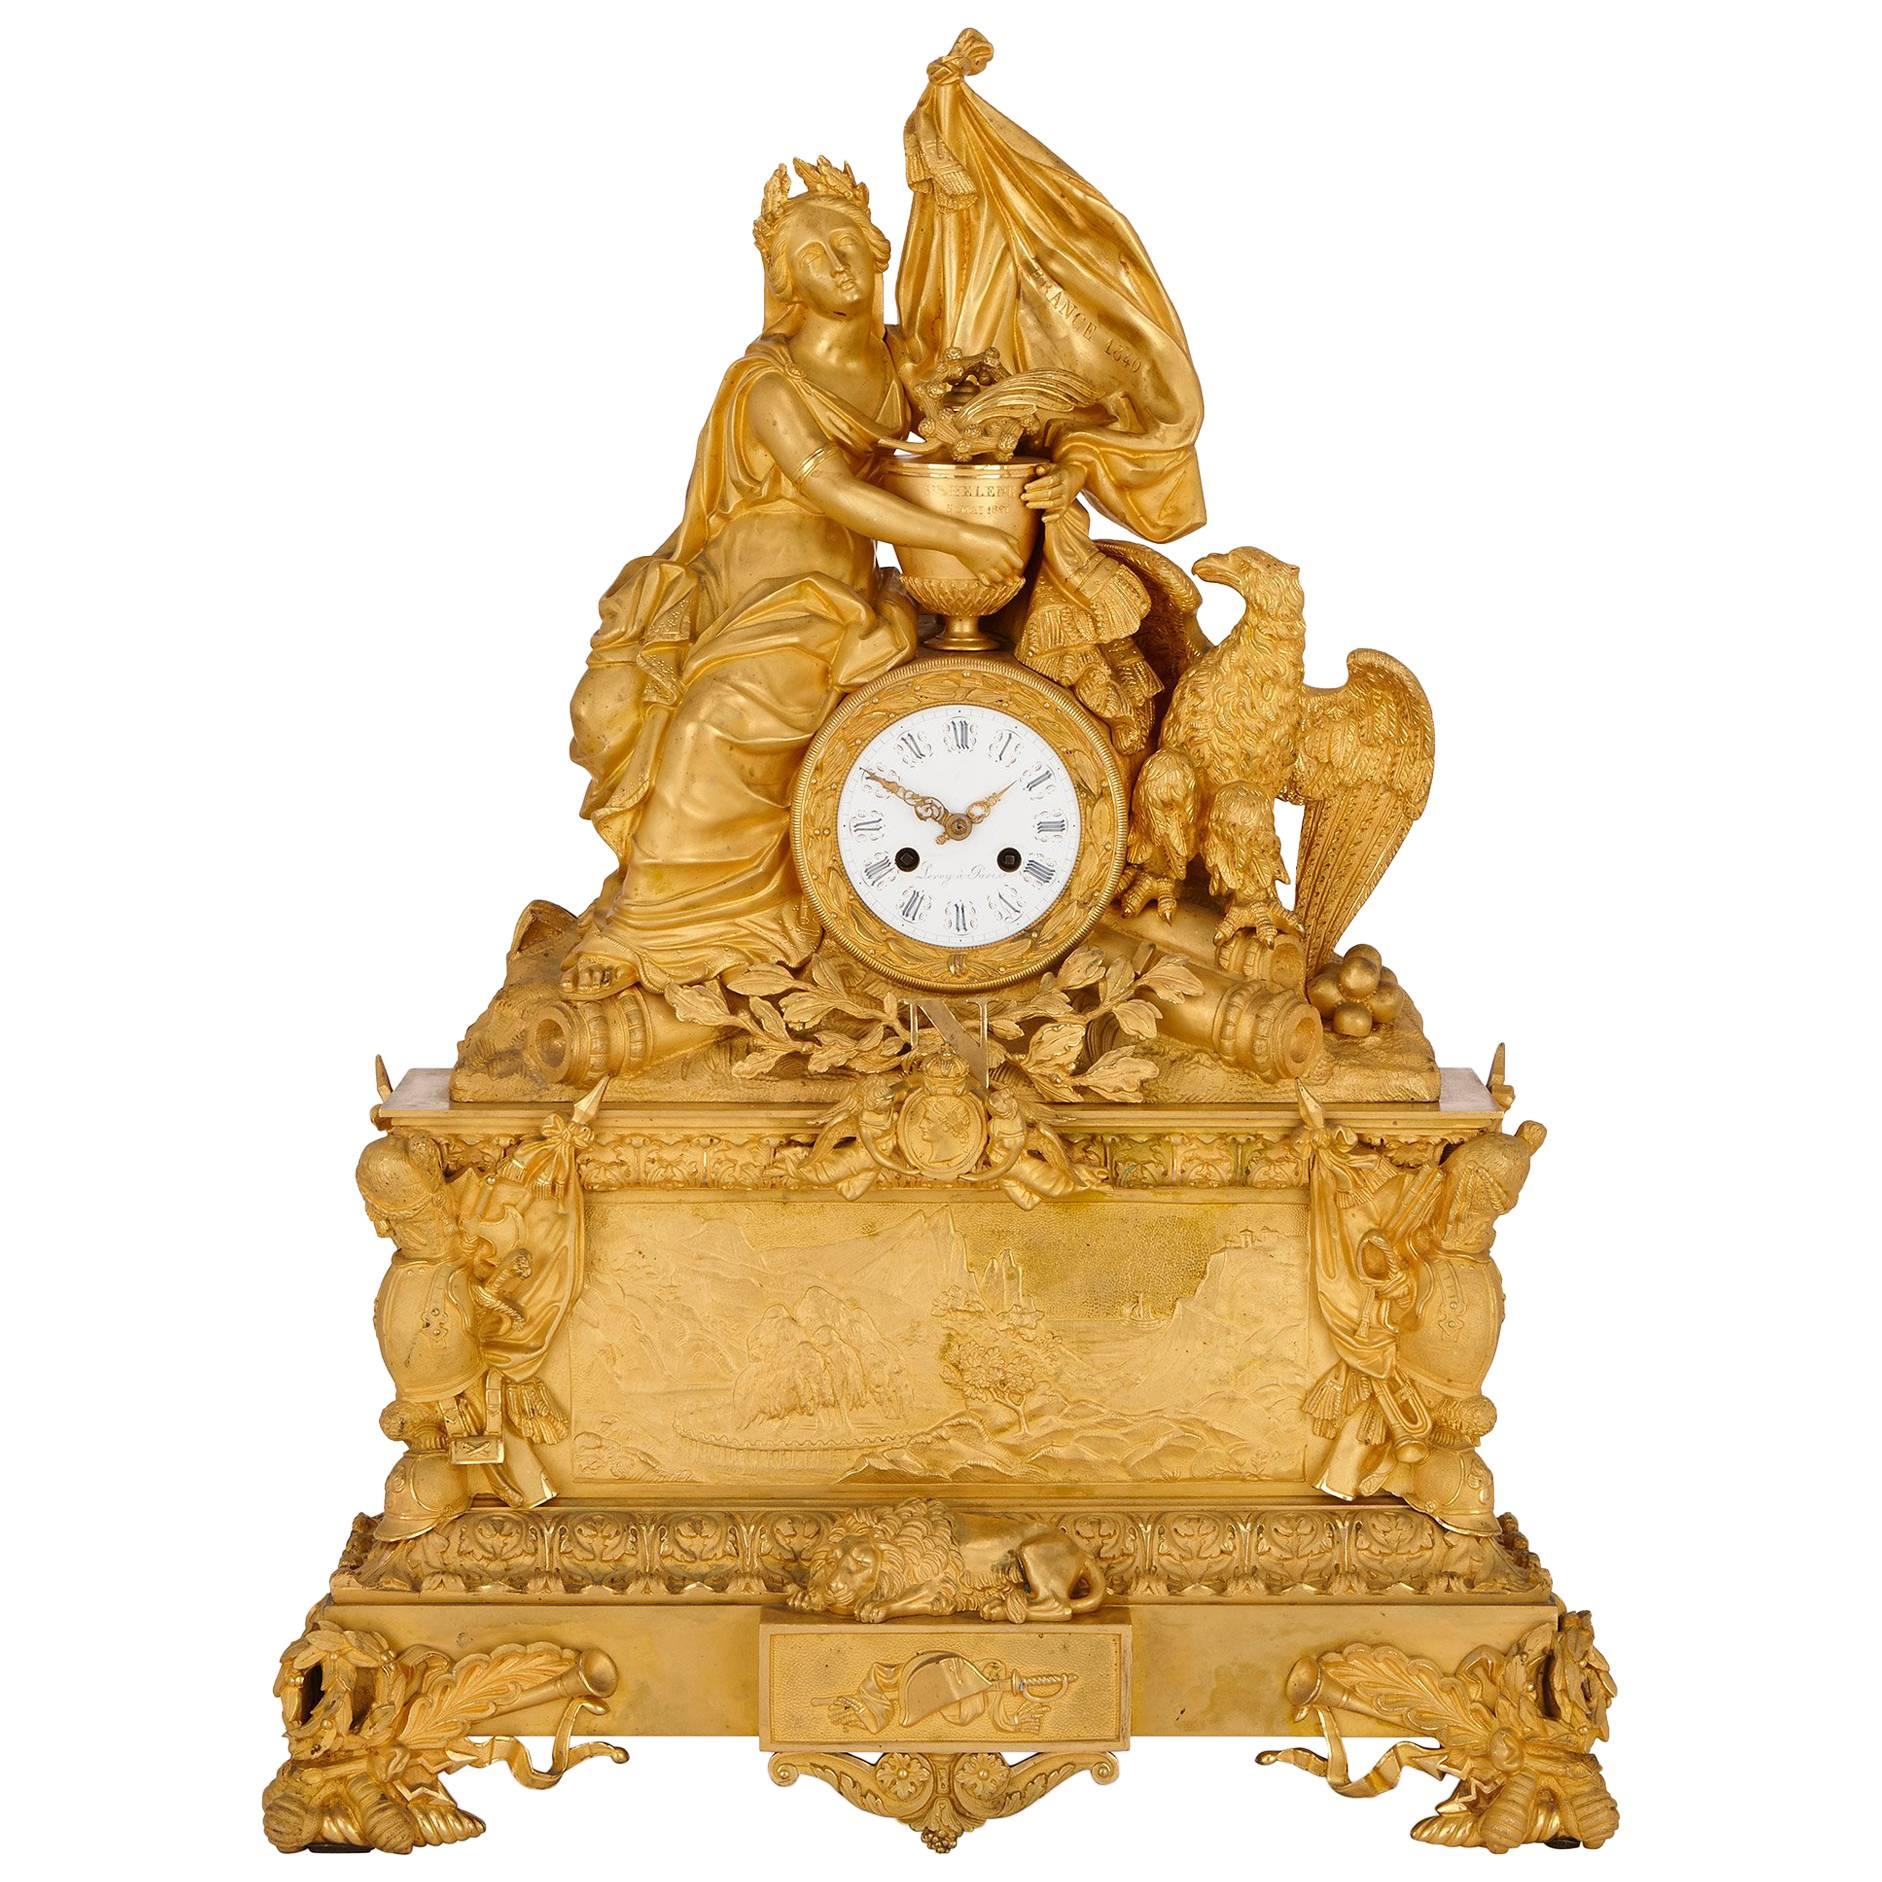 French Antique Ormolu Mantel Clock by Leroy Commemorating Napoleon Bonaparte